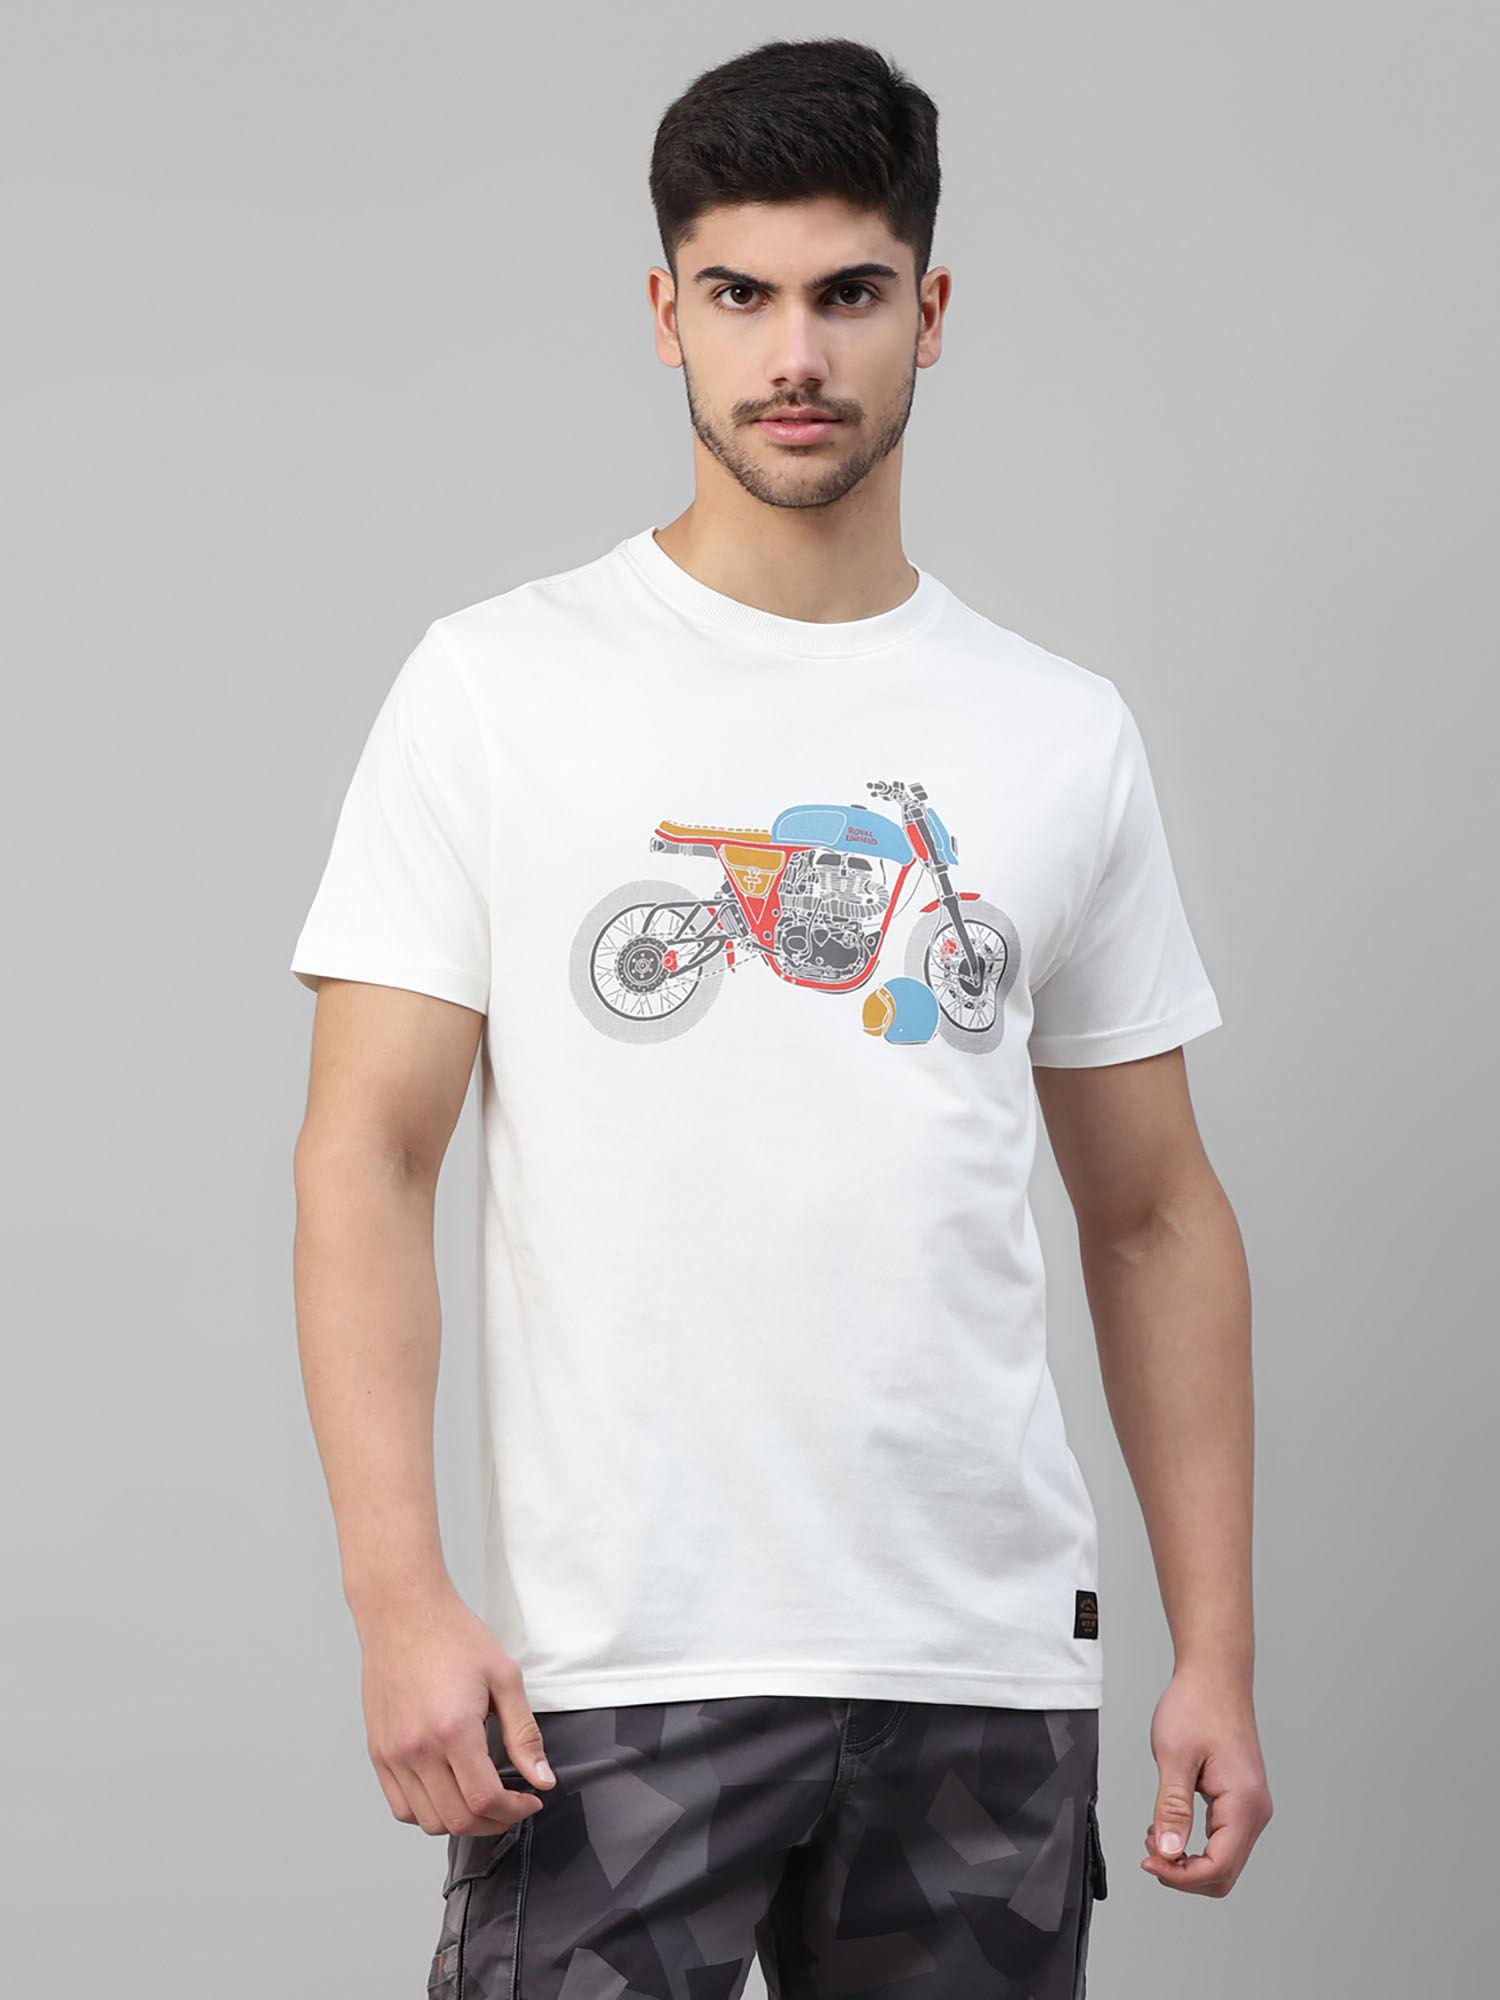 tnt motorcycles t-shirt